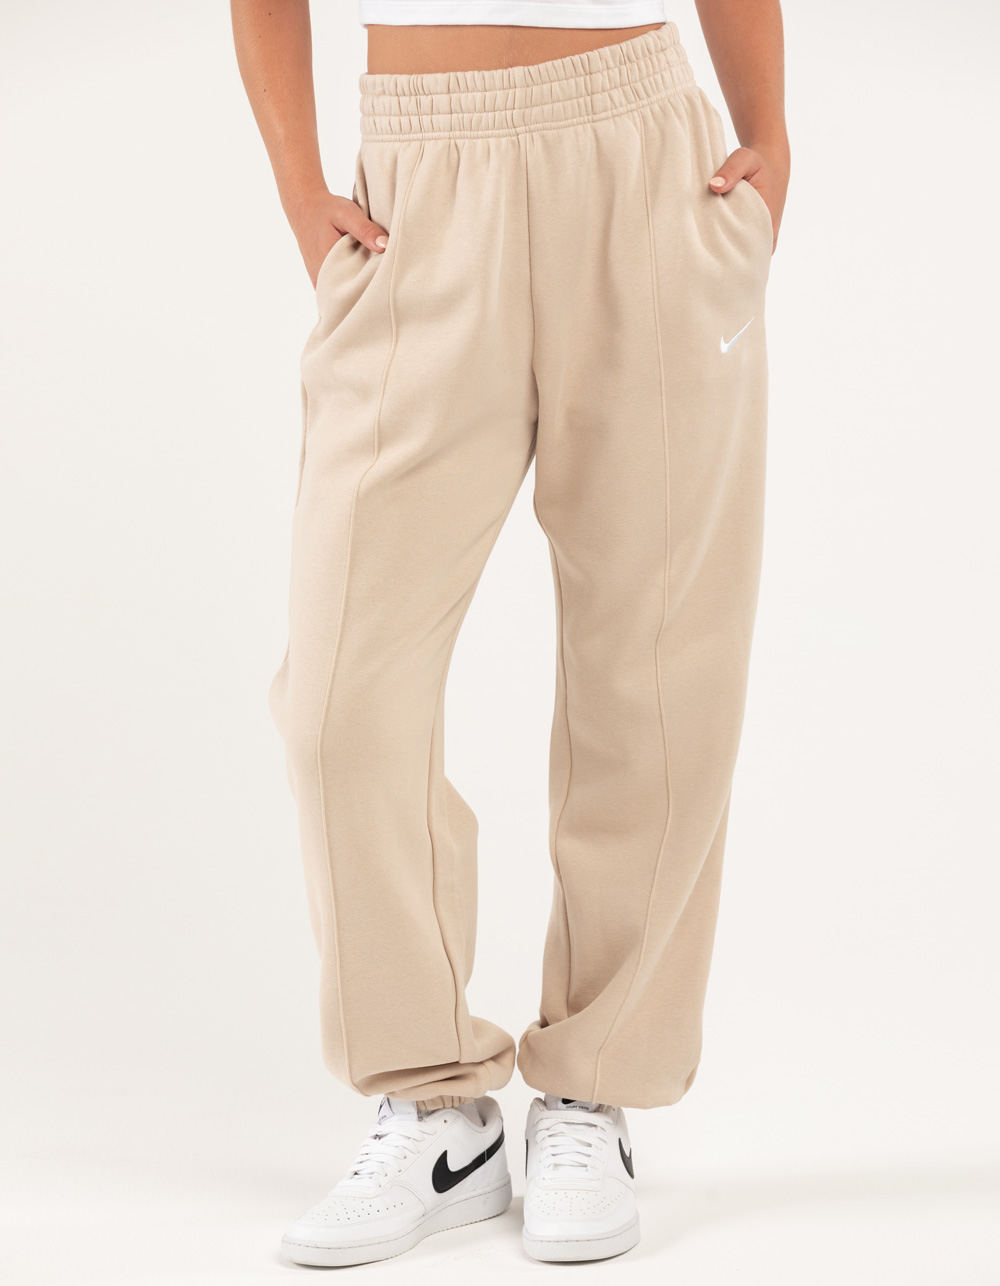 NIKE Sportswear Essentials Womens Sweatpants - SAND | Tillys